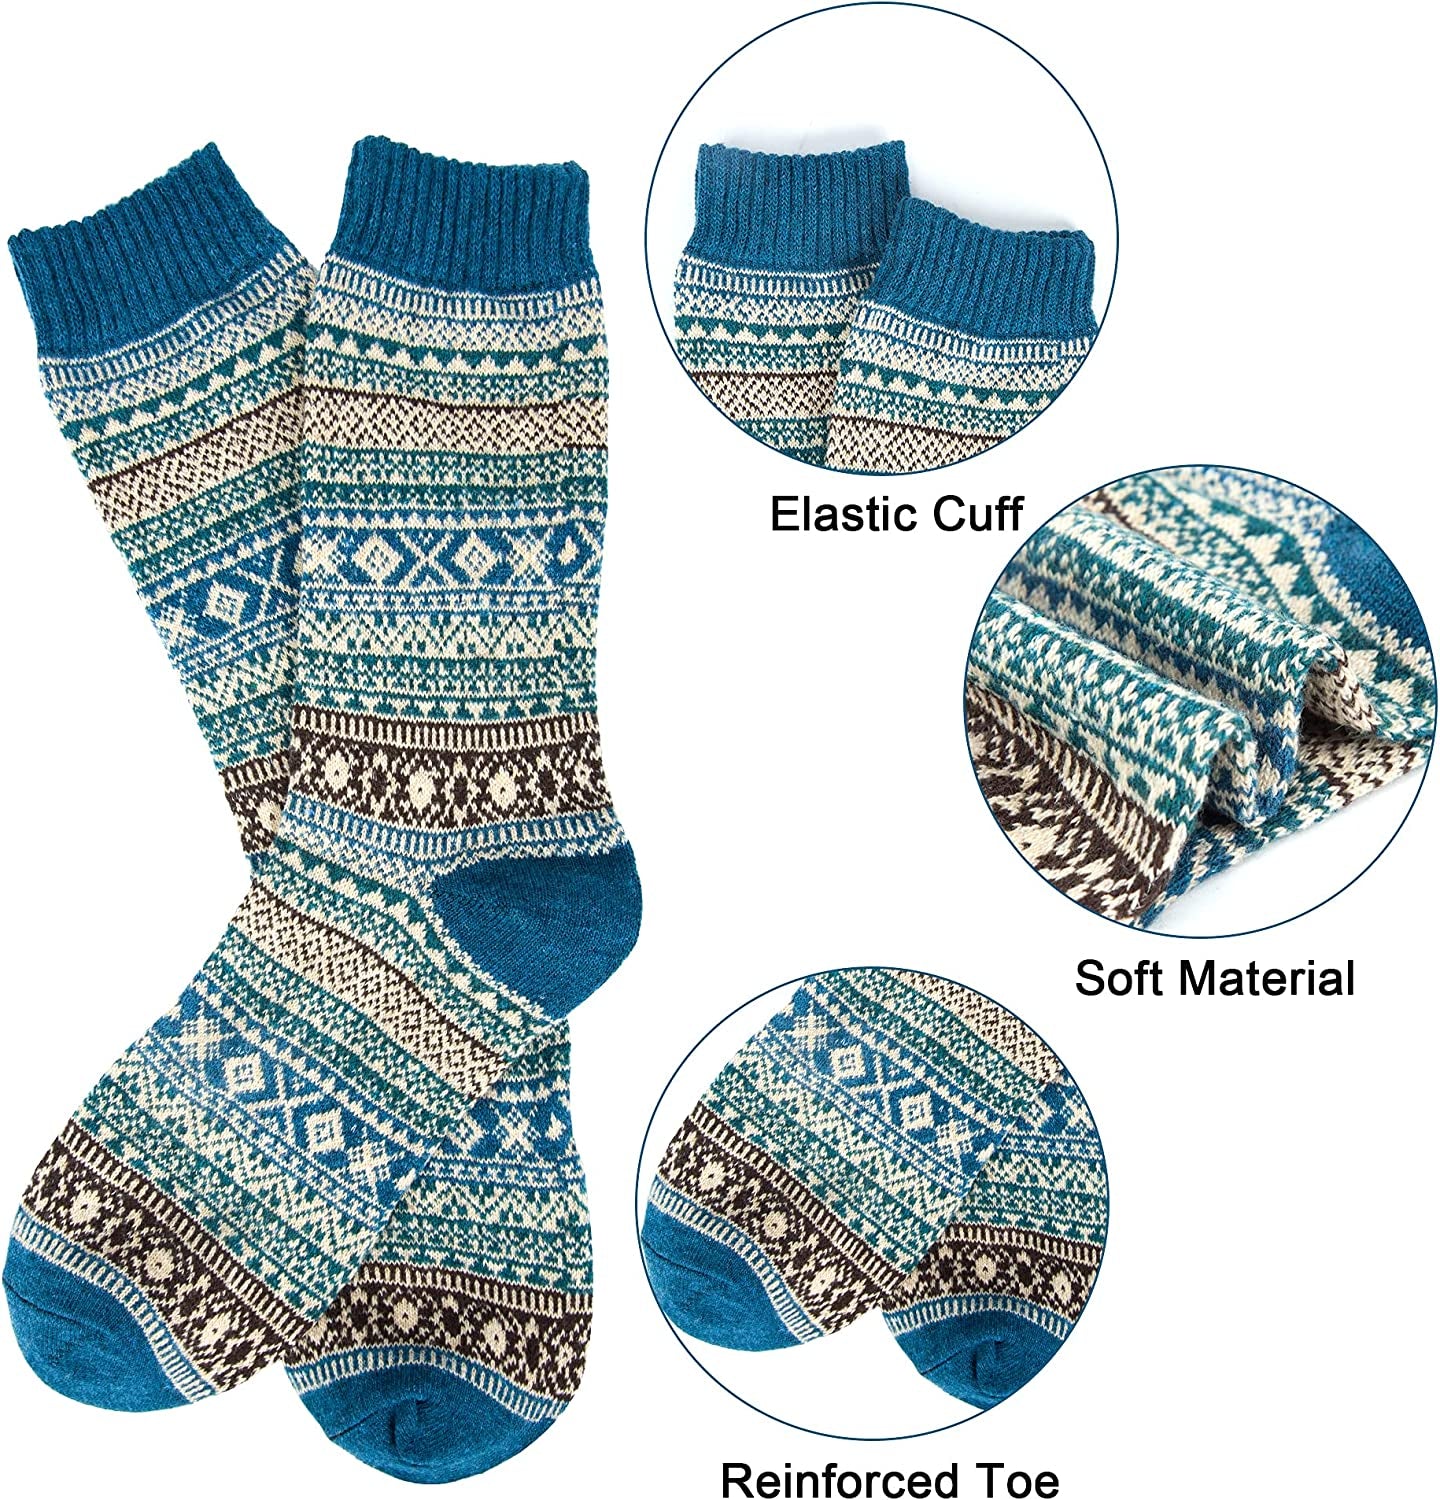 5 Pairs Mens Wool Socks Winter Warm Thick Socks Knit Causal Crew Socks for Men